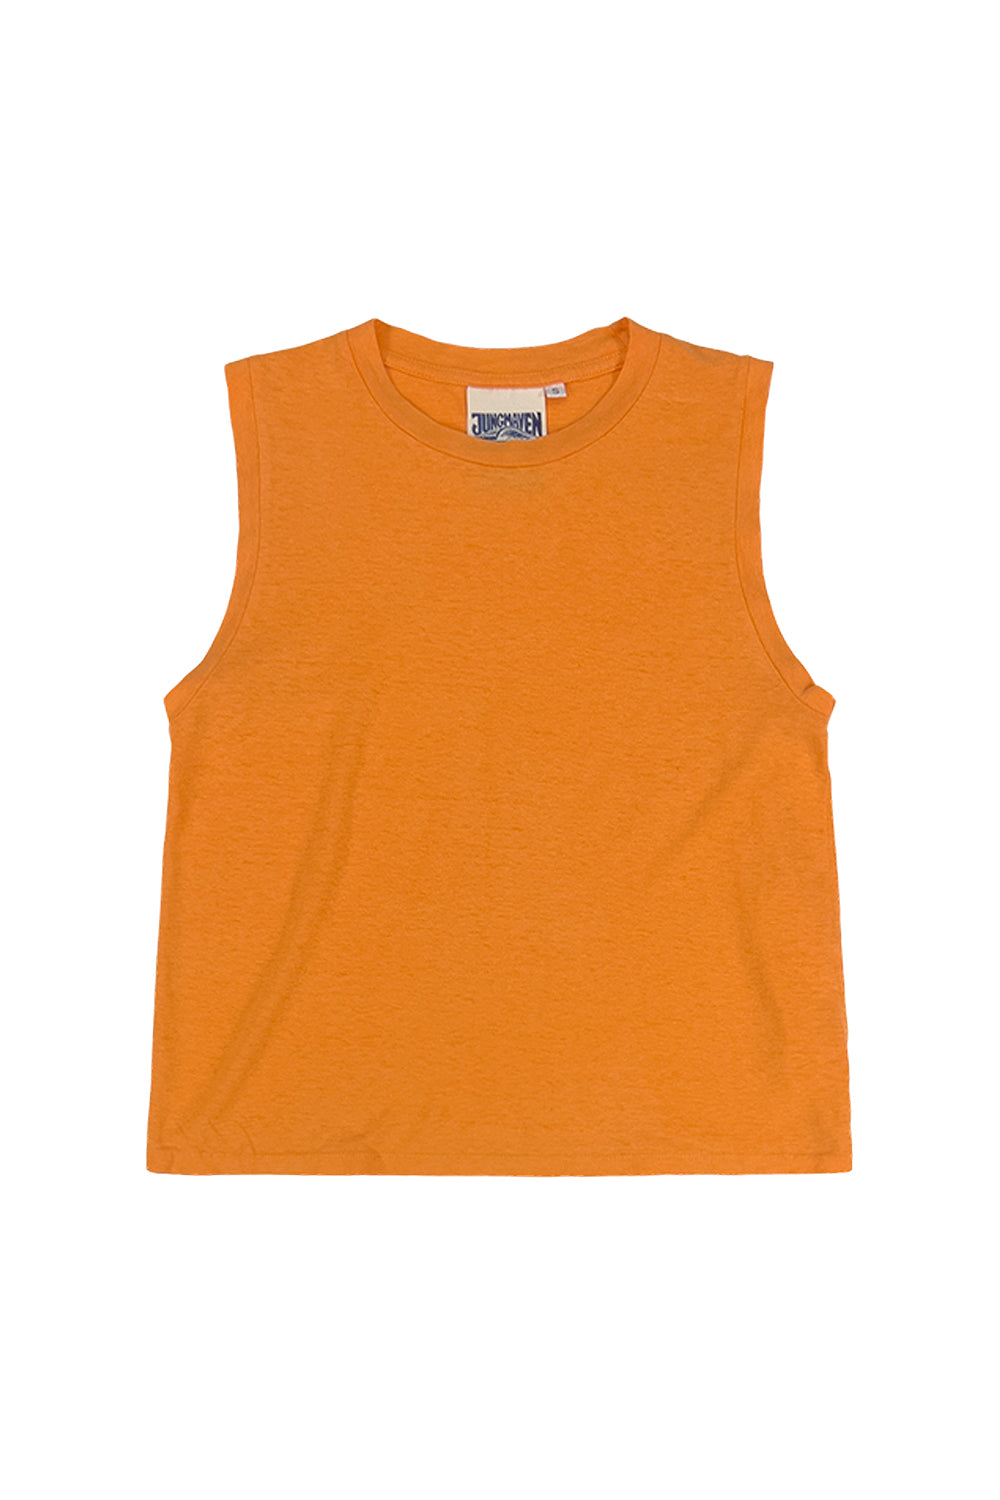 Phoenix Muscle Tee | Jungmaven Hemp Clothing & Accessories / Color: Apricot Crush